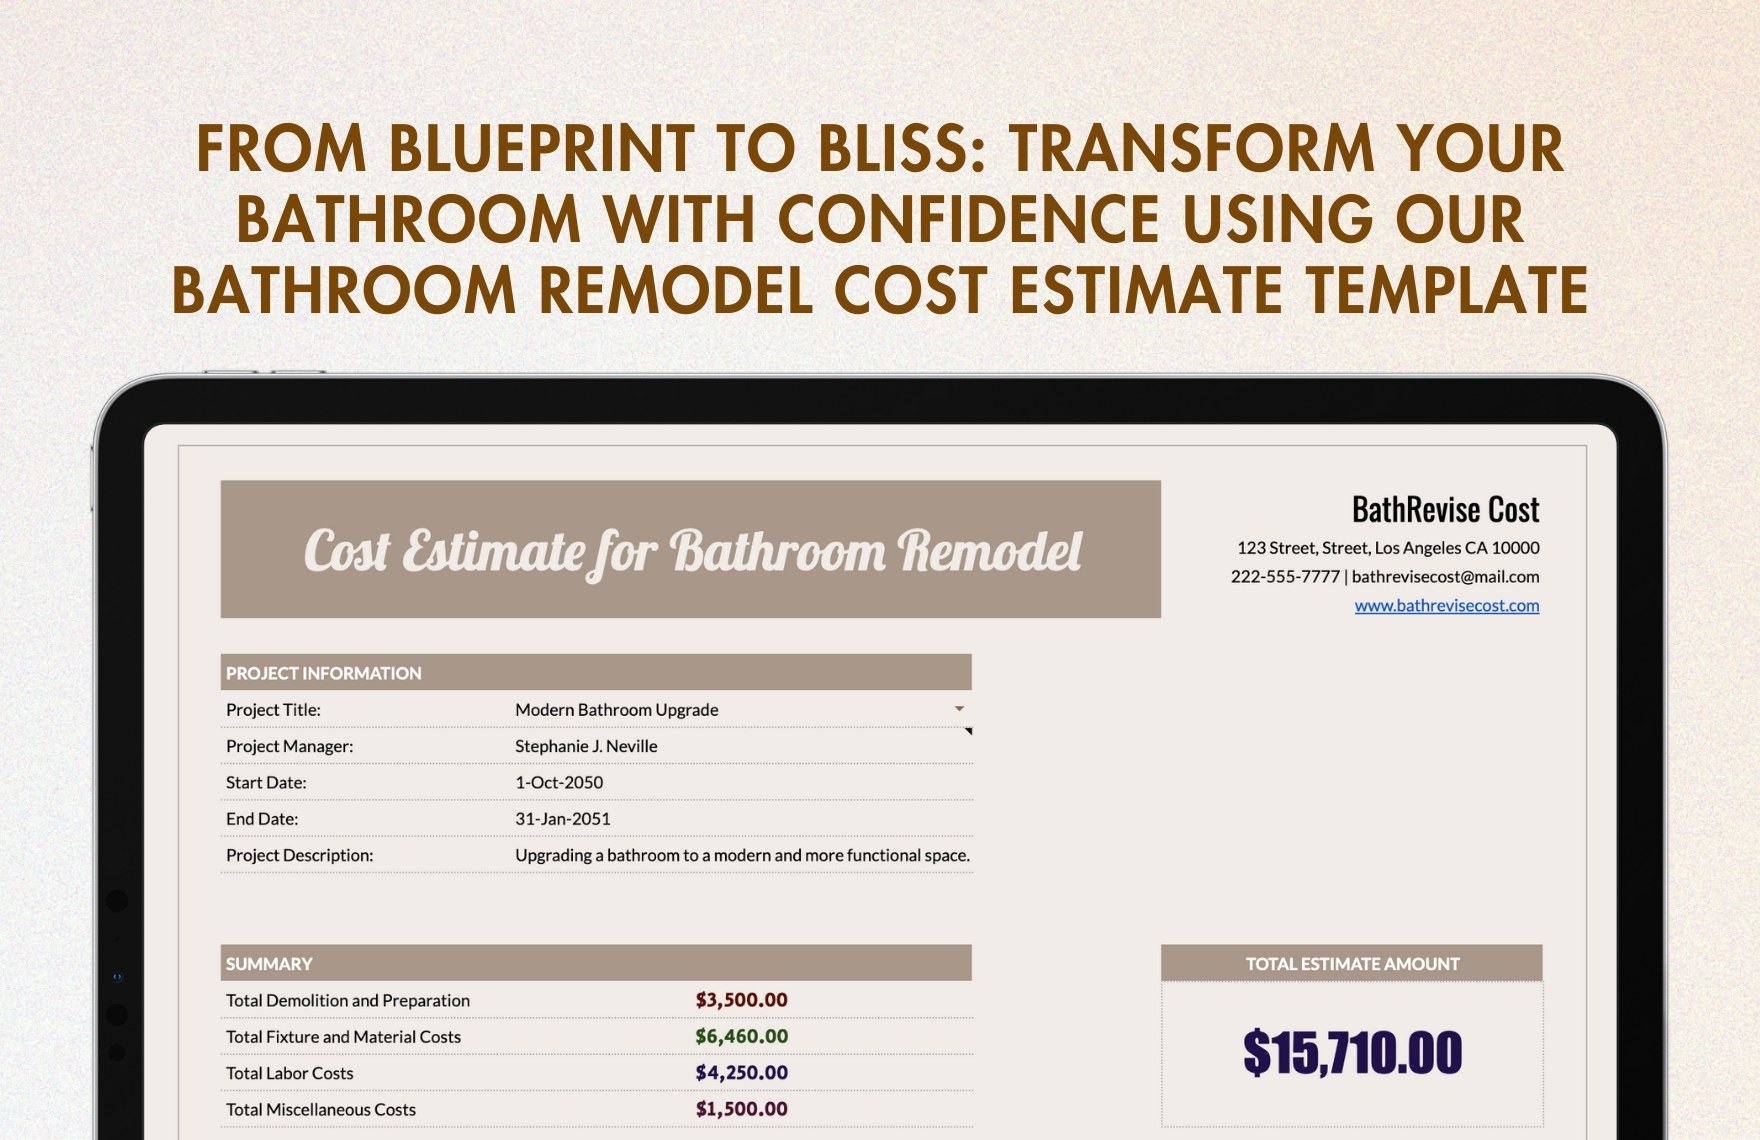 Cost Estimate for Bathroom Remodel Template